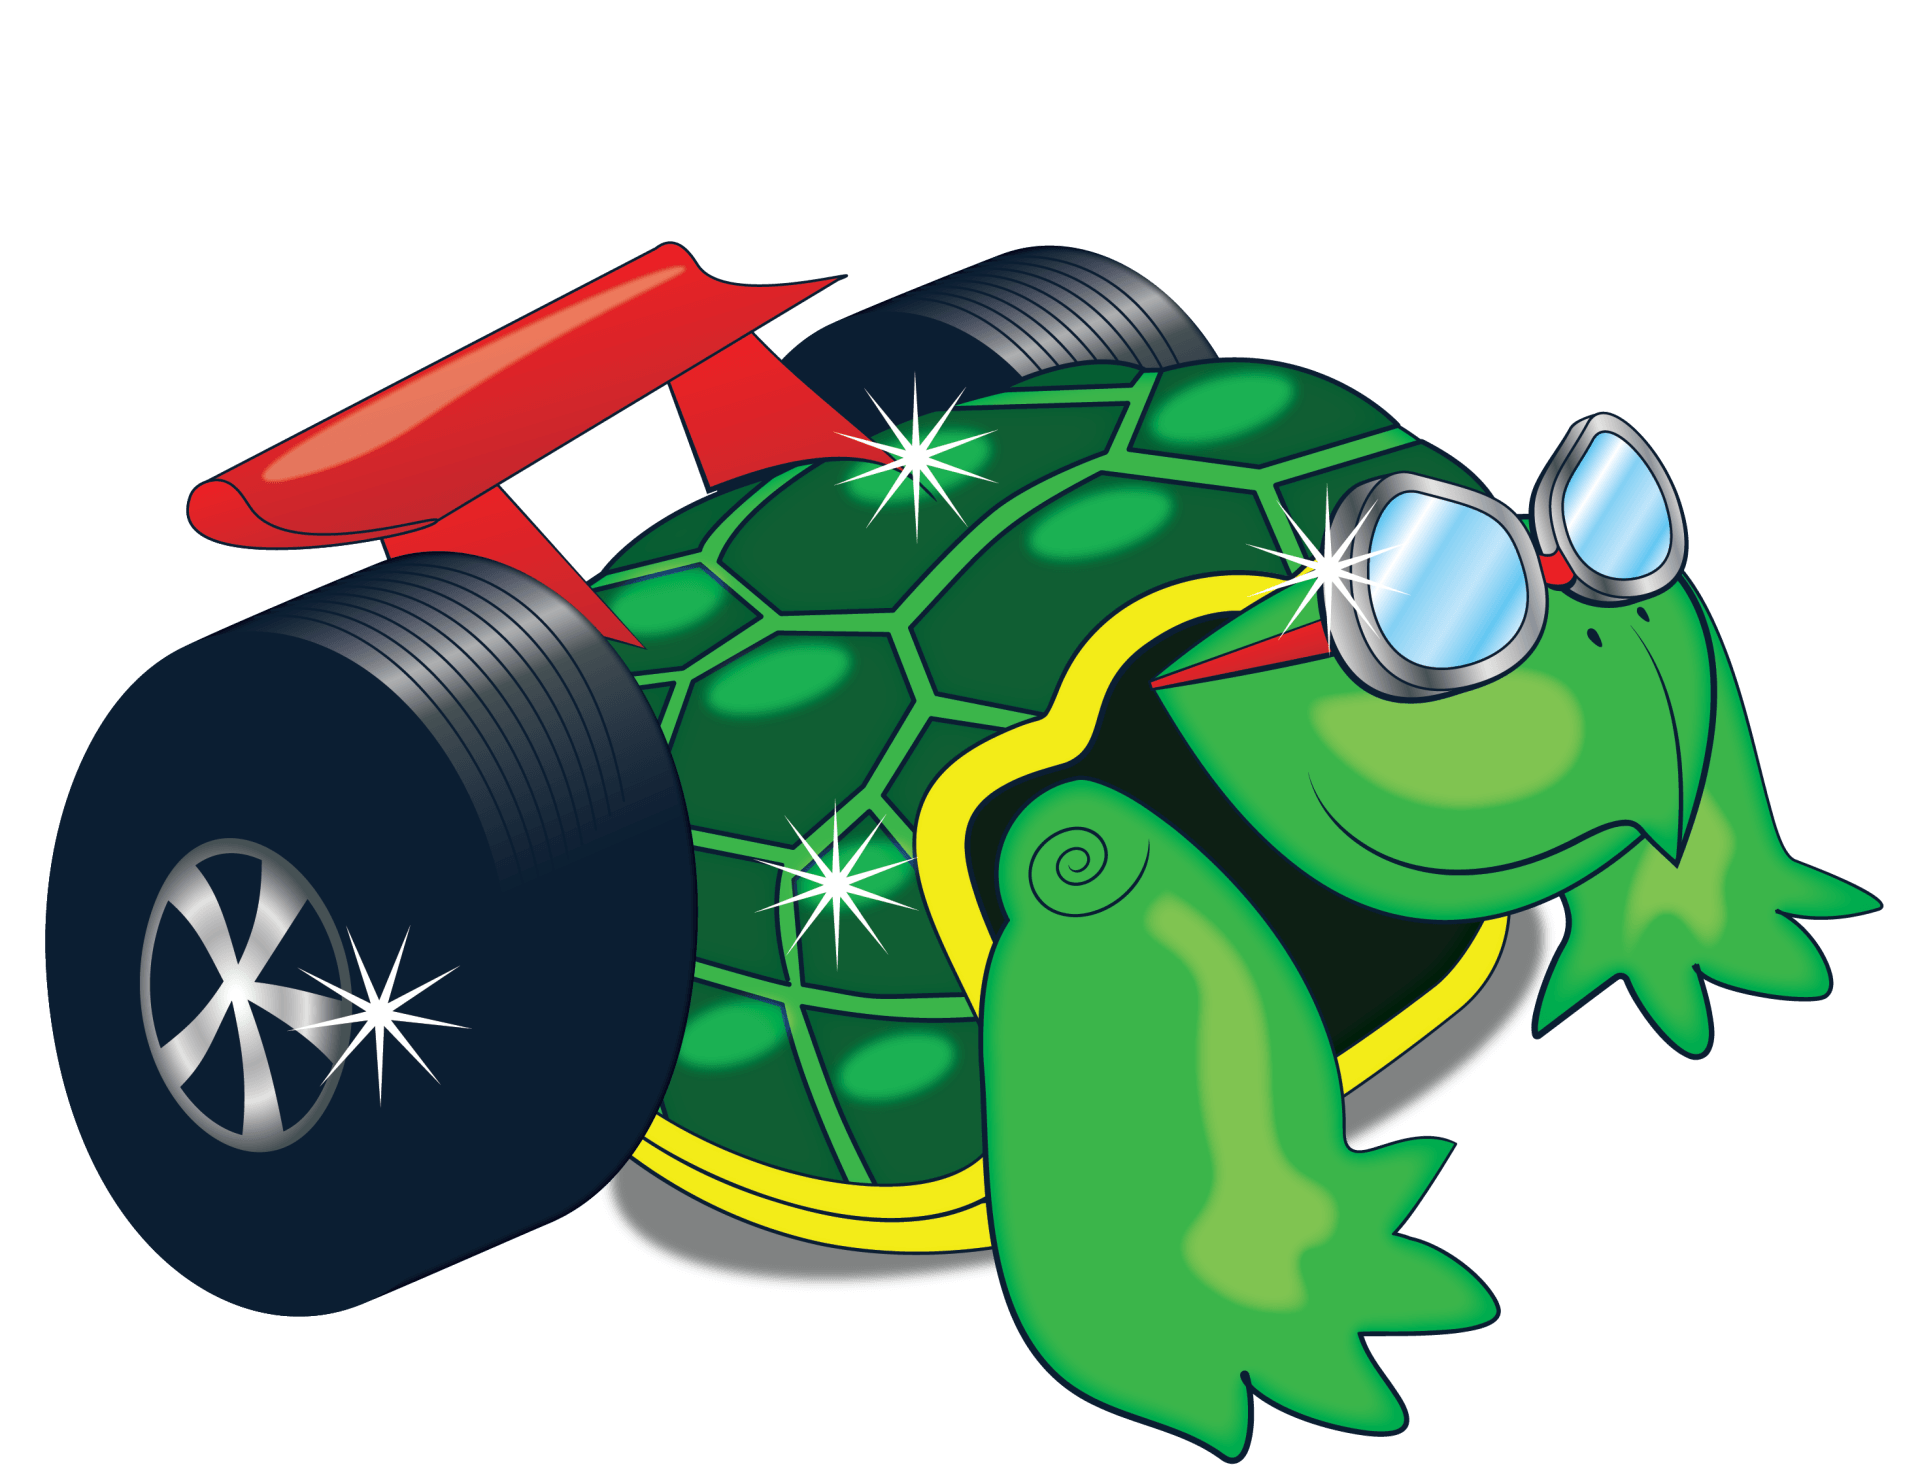 Turbo the turtle at Green Clean Auto Spa in North Carolina